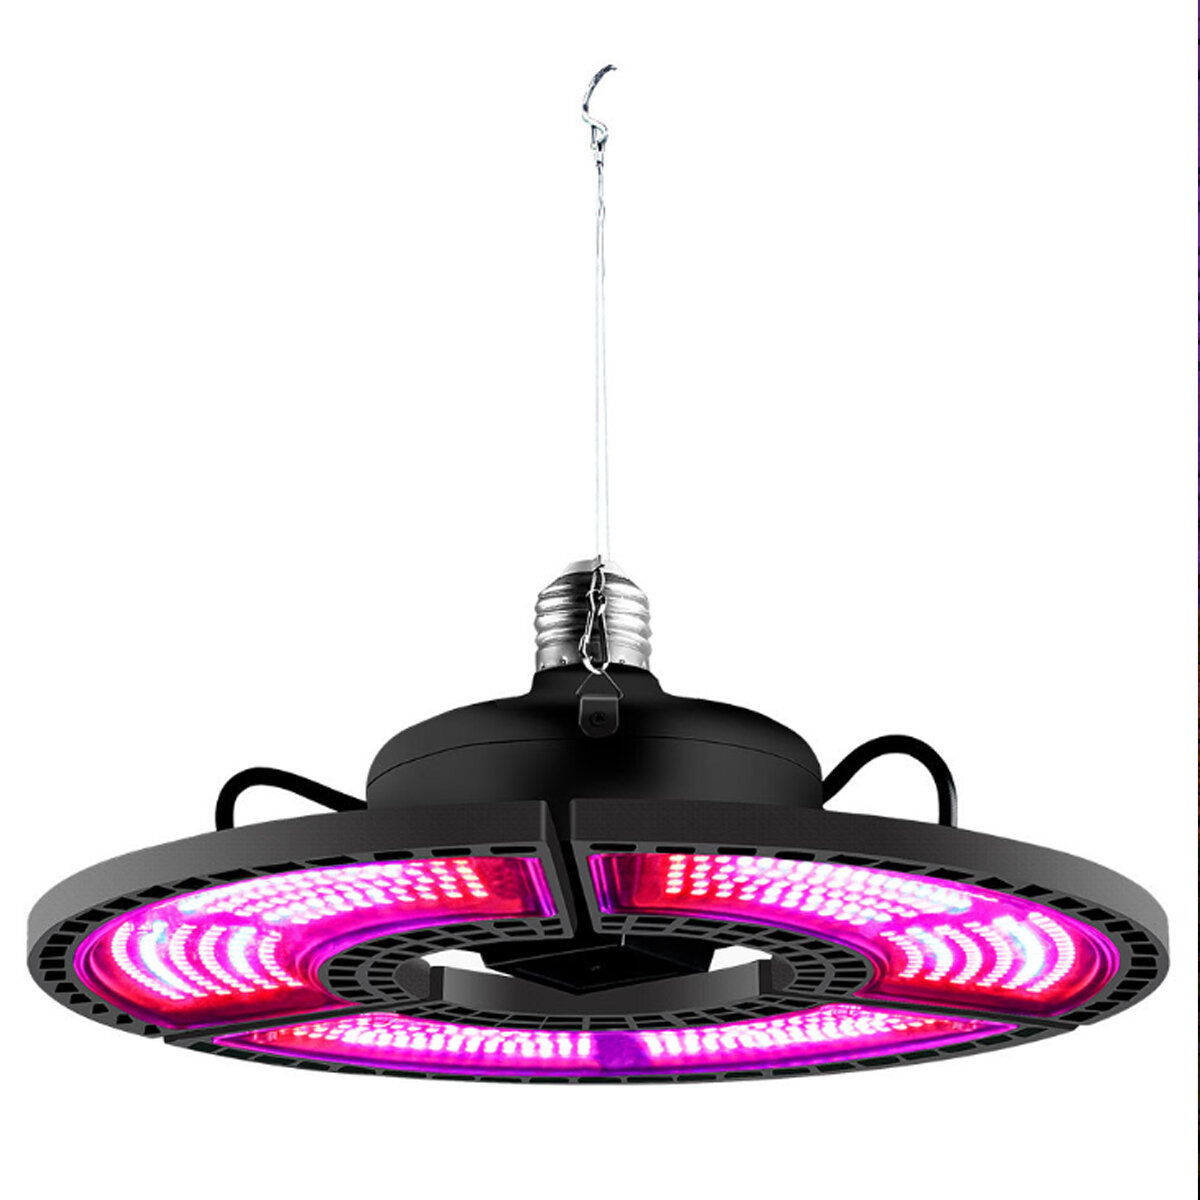 Image of E27 LED Grow Light Full Spectrum Hydroponic Lamp Bulb for Indoor Plant Flower Growing AC100-277V